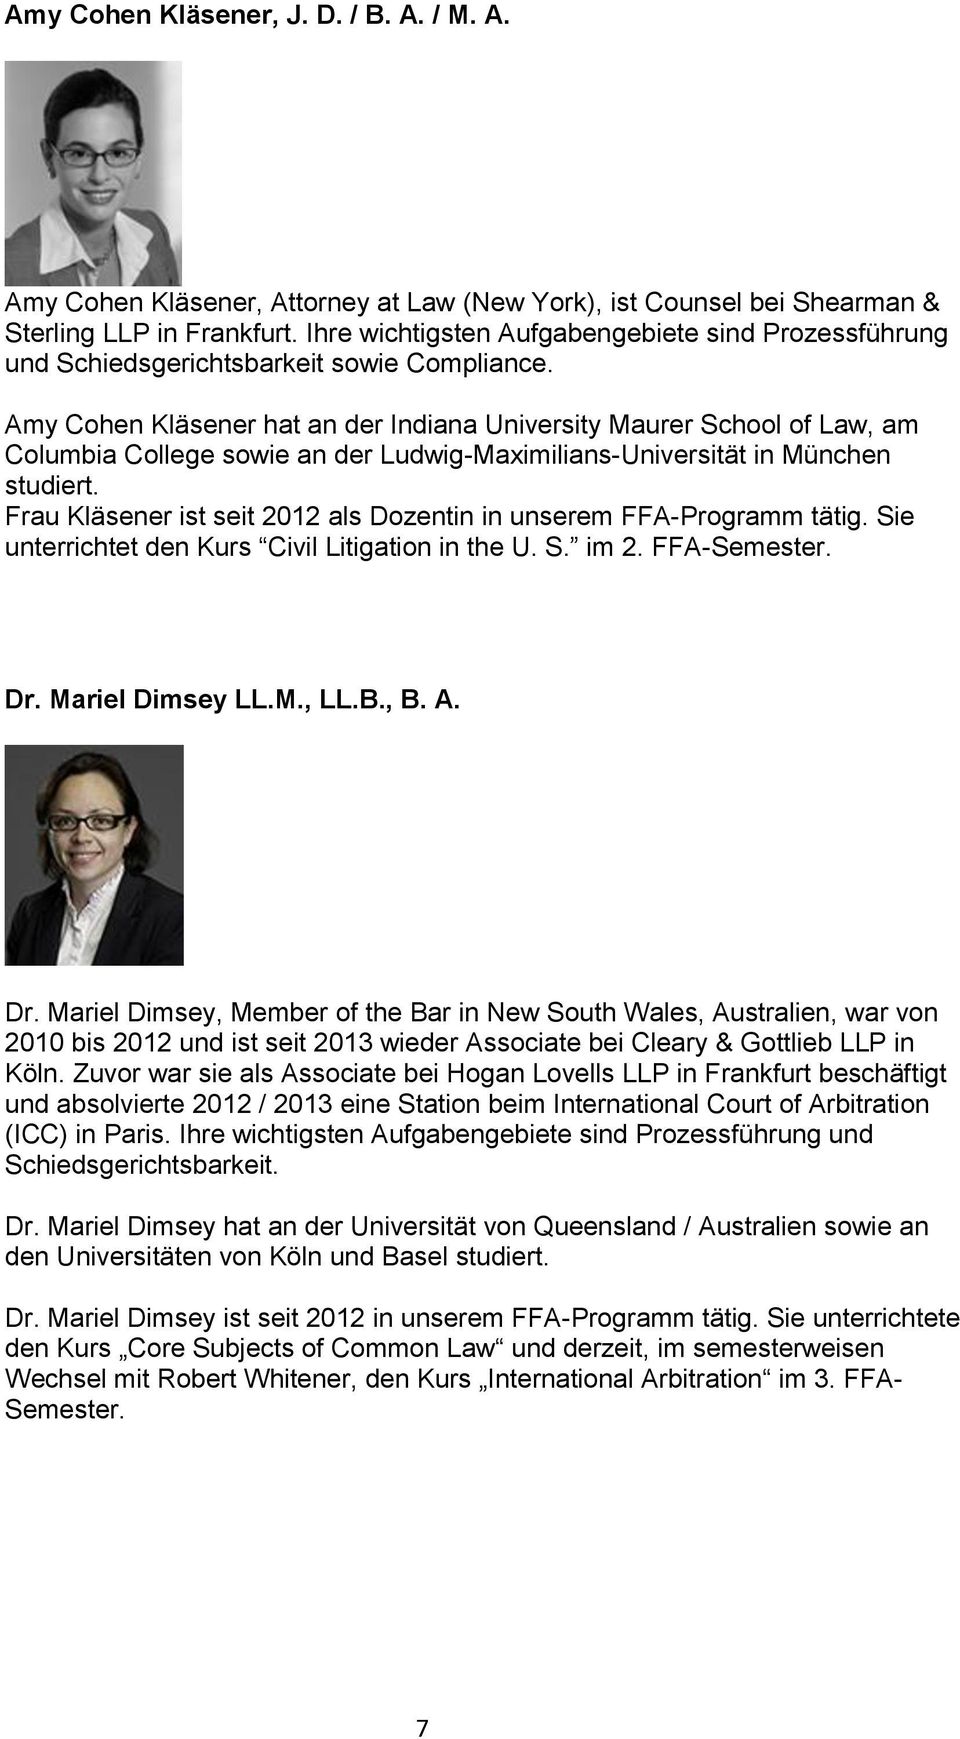 Amy Cohen Kläsener hat an der Indiana University Maurer School of Law, am Columbia College sowie an der Ludwig-Maximilians-Universität in München studiert.